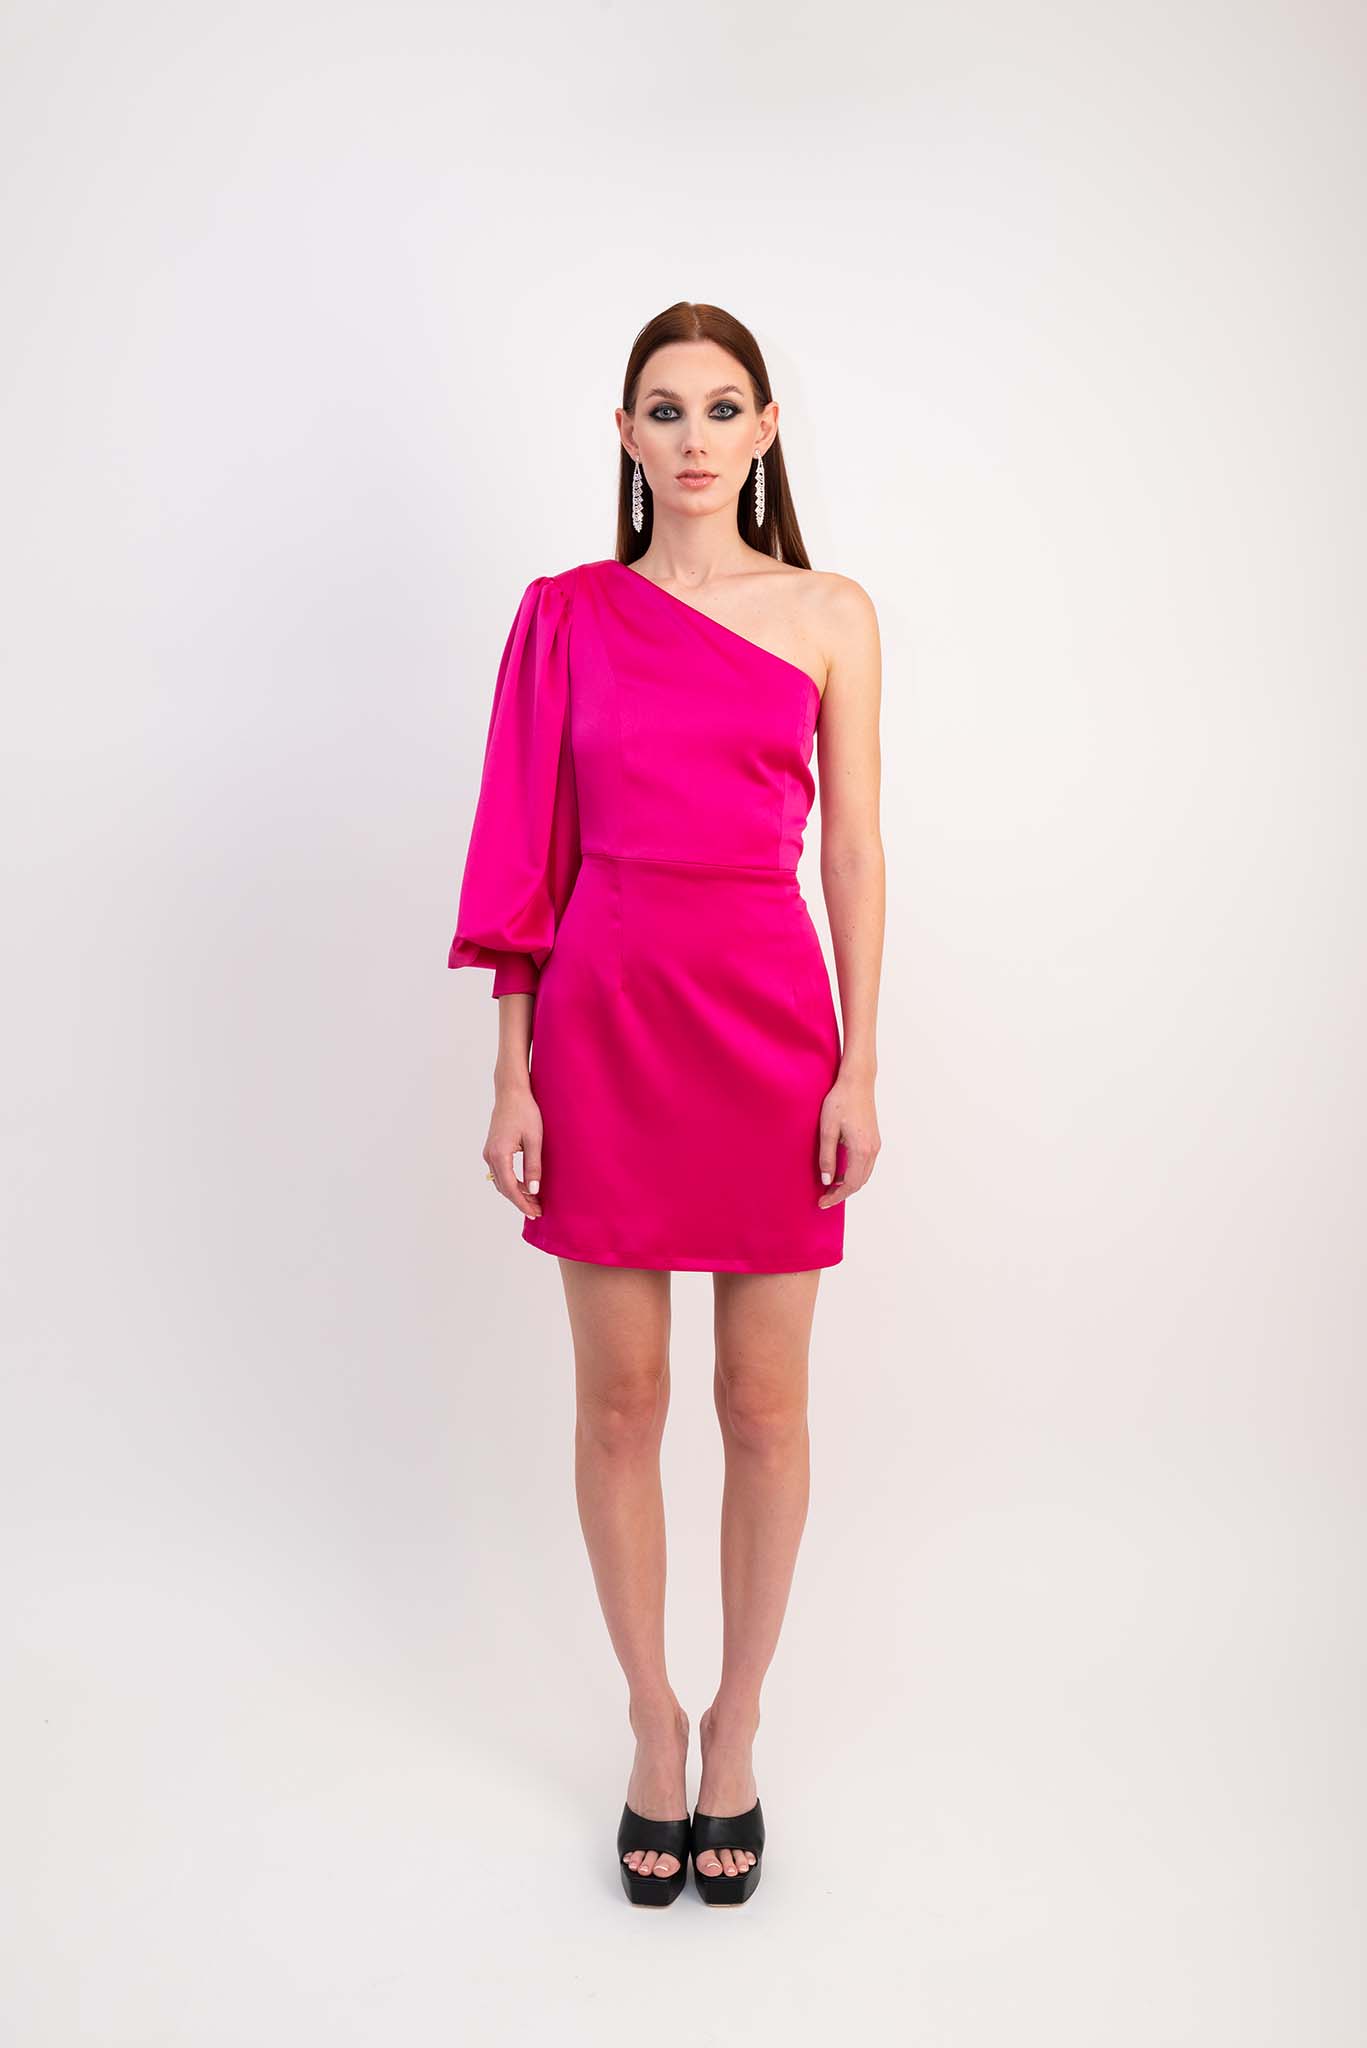 IRA by Irini Charalampous, @irathebrand online shop fashionable ready-to-wear womenswear brand satin dress AMARIS color fuchsia high heels Cyprus Greece